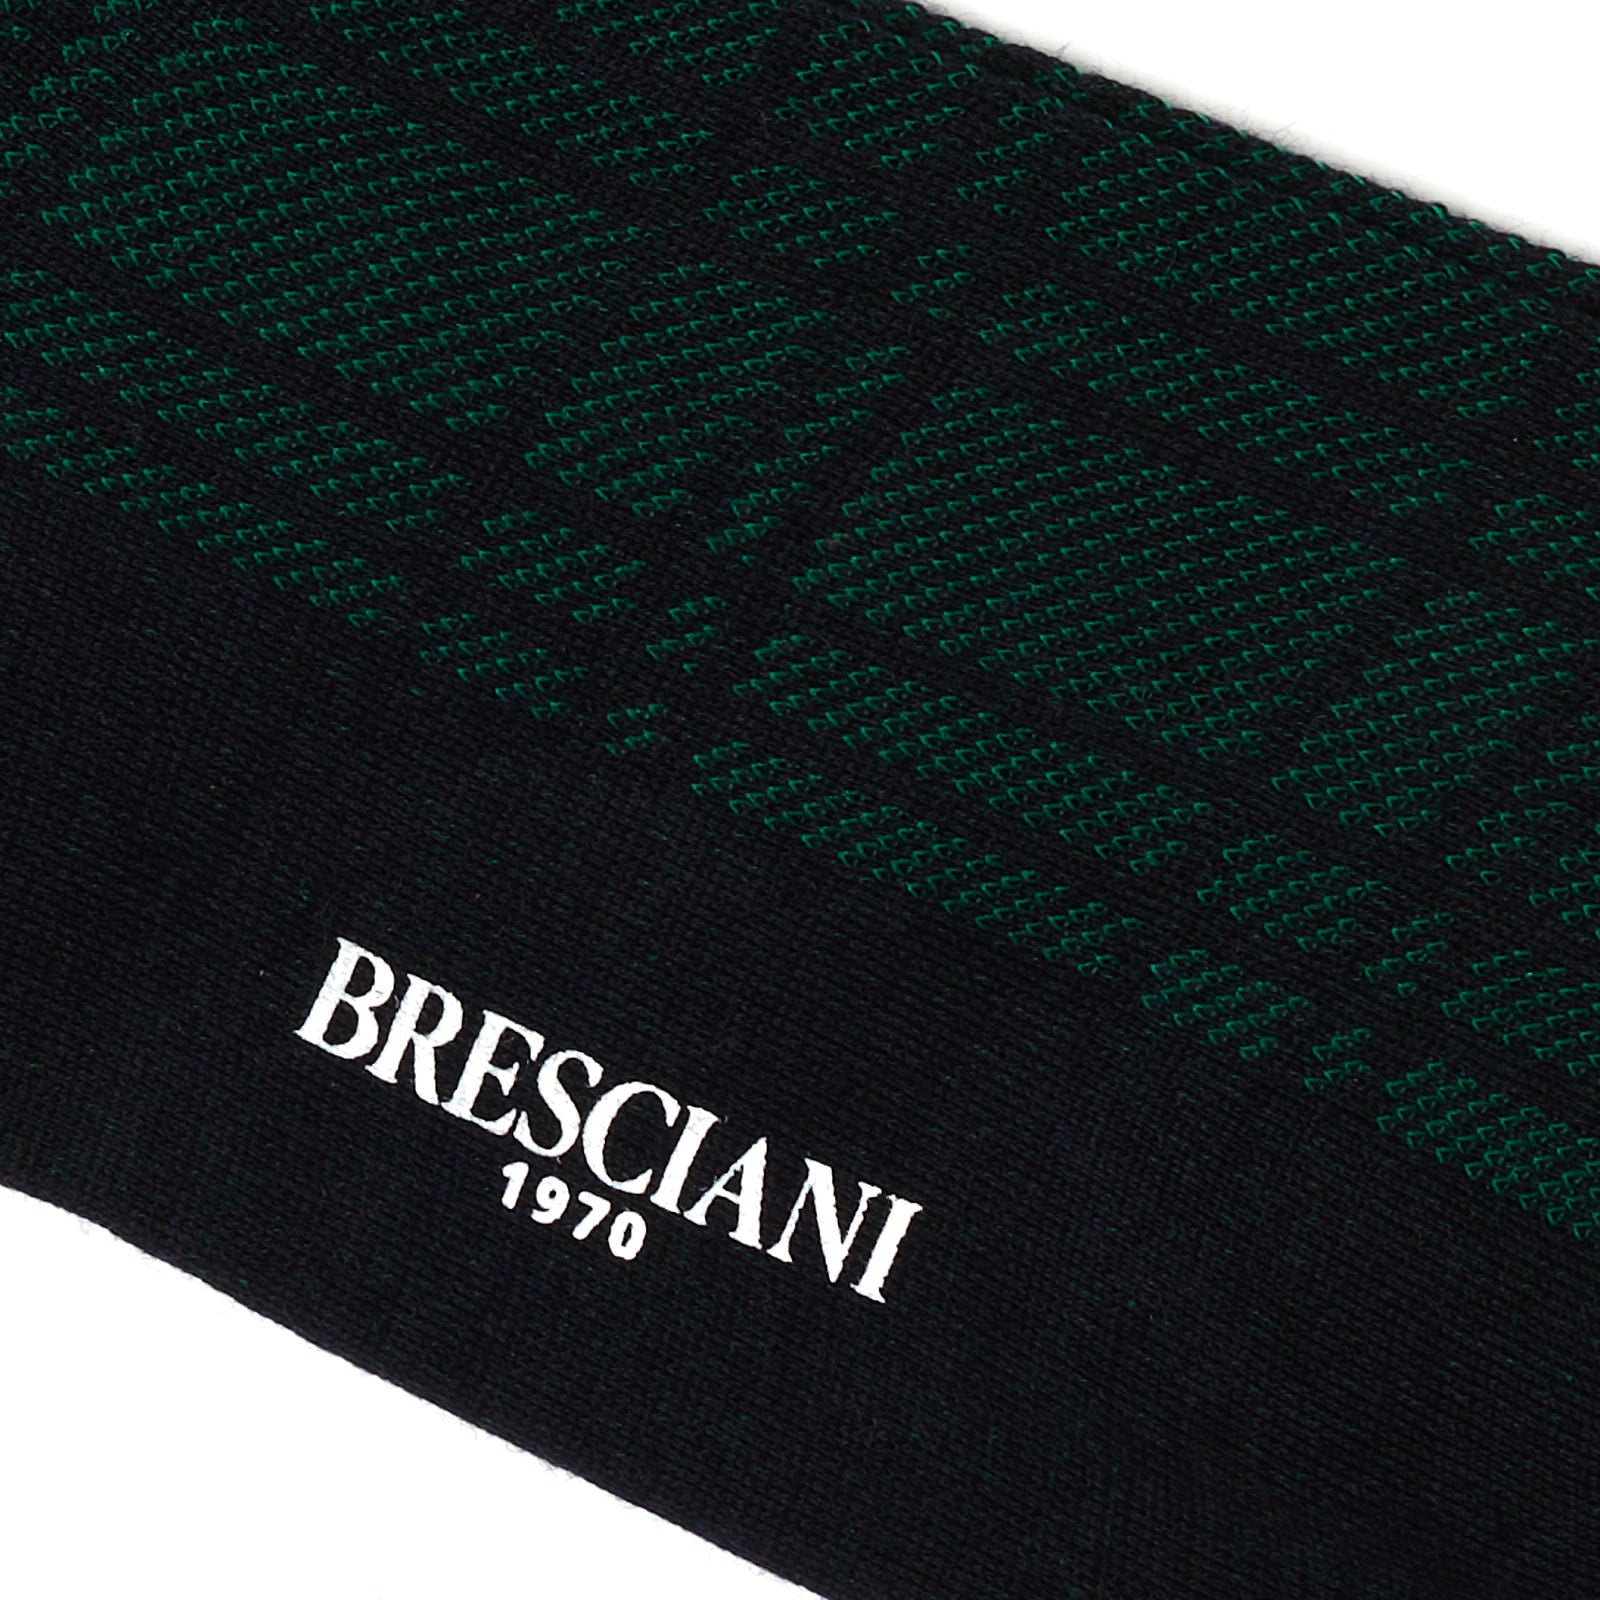 BRESCIANI Wool Geometry Pattern Design Mid Calf Length Socks US M-L